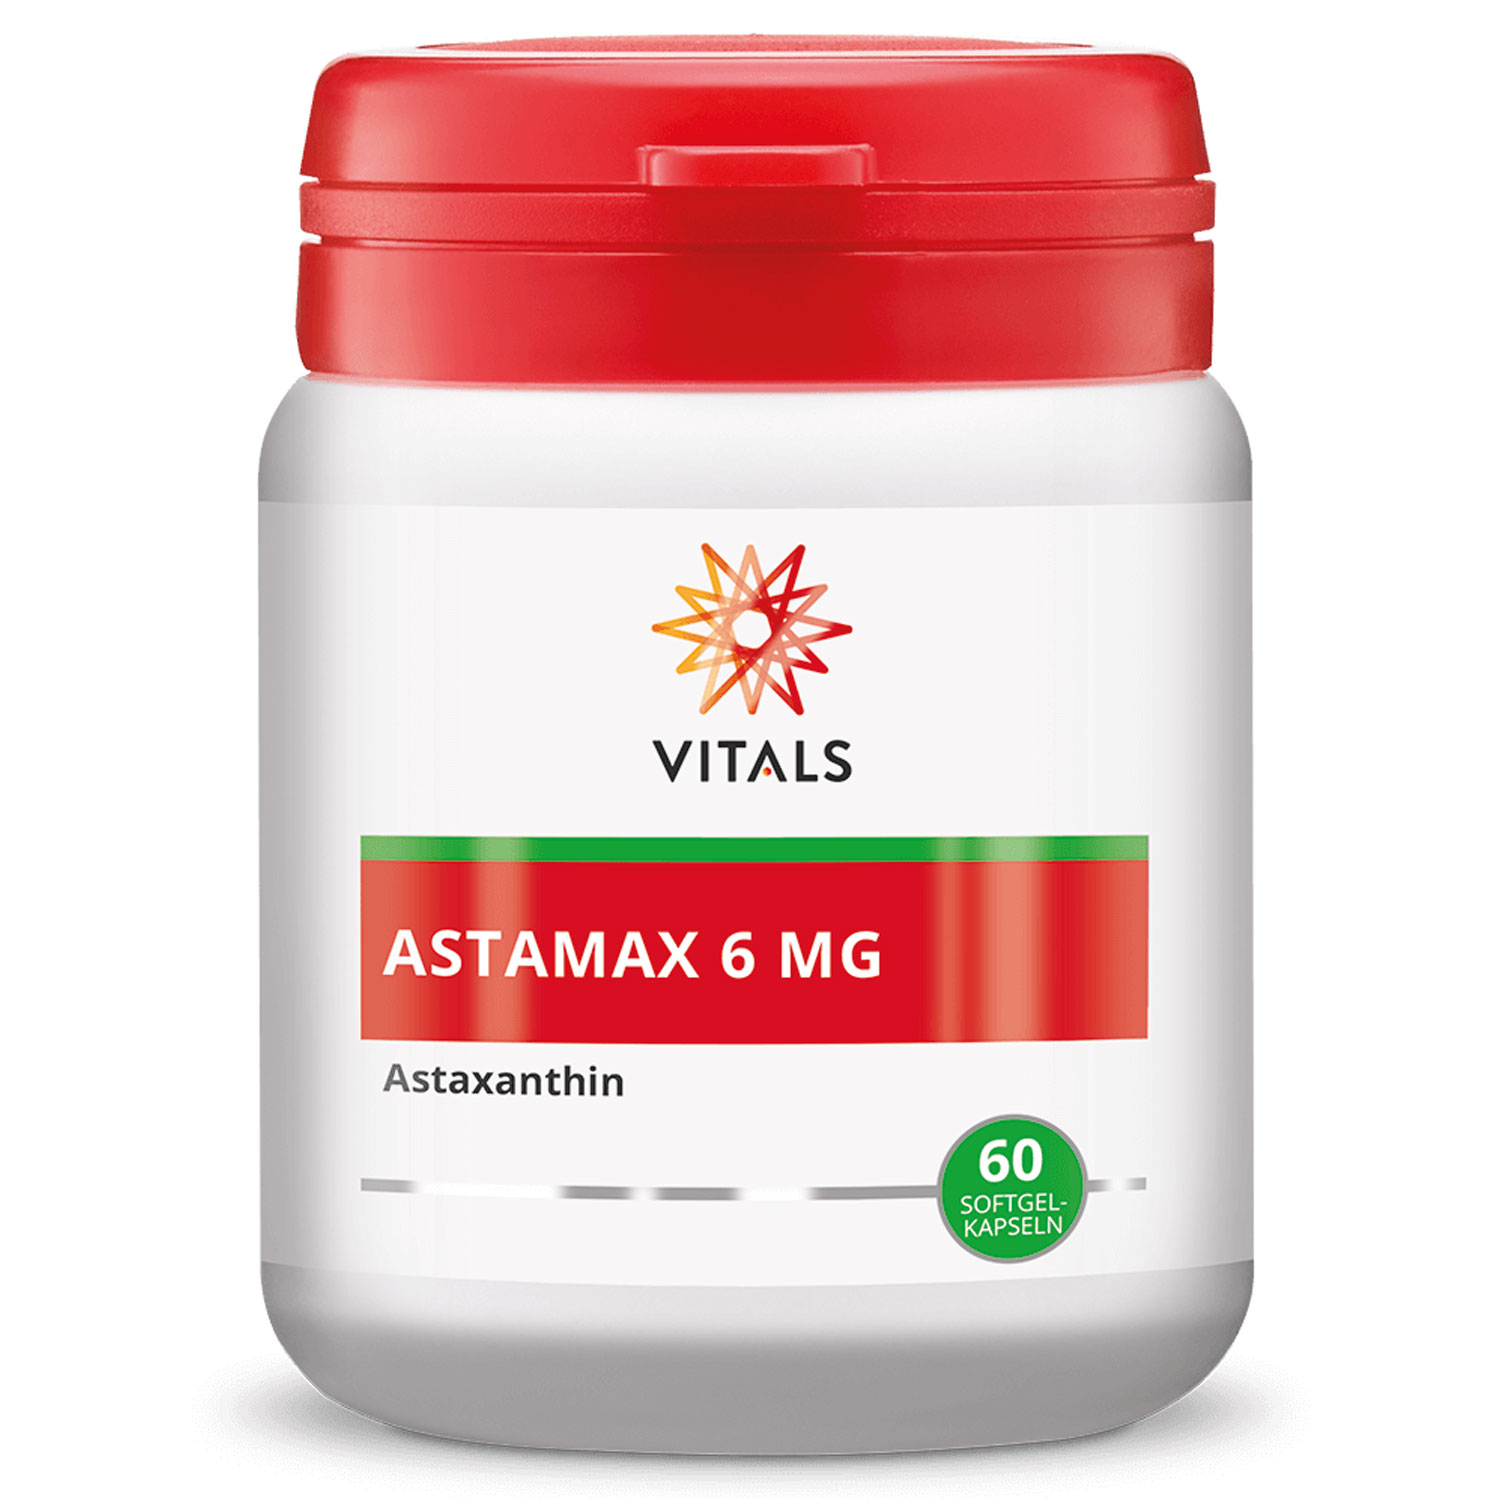 Astamax 6 mg von Vitals - 60 Softgel-Kapseln